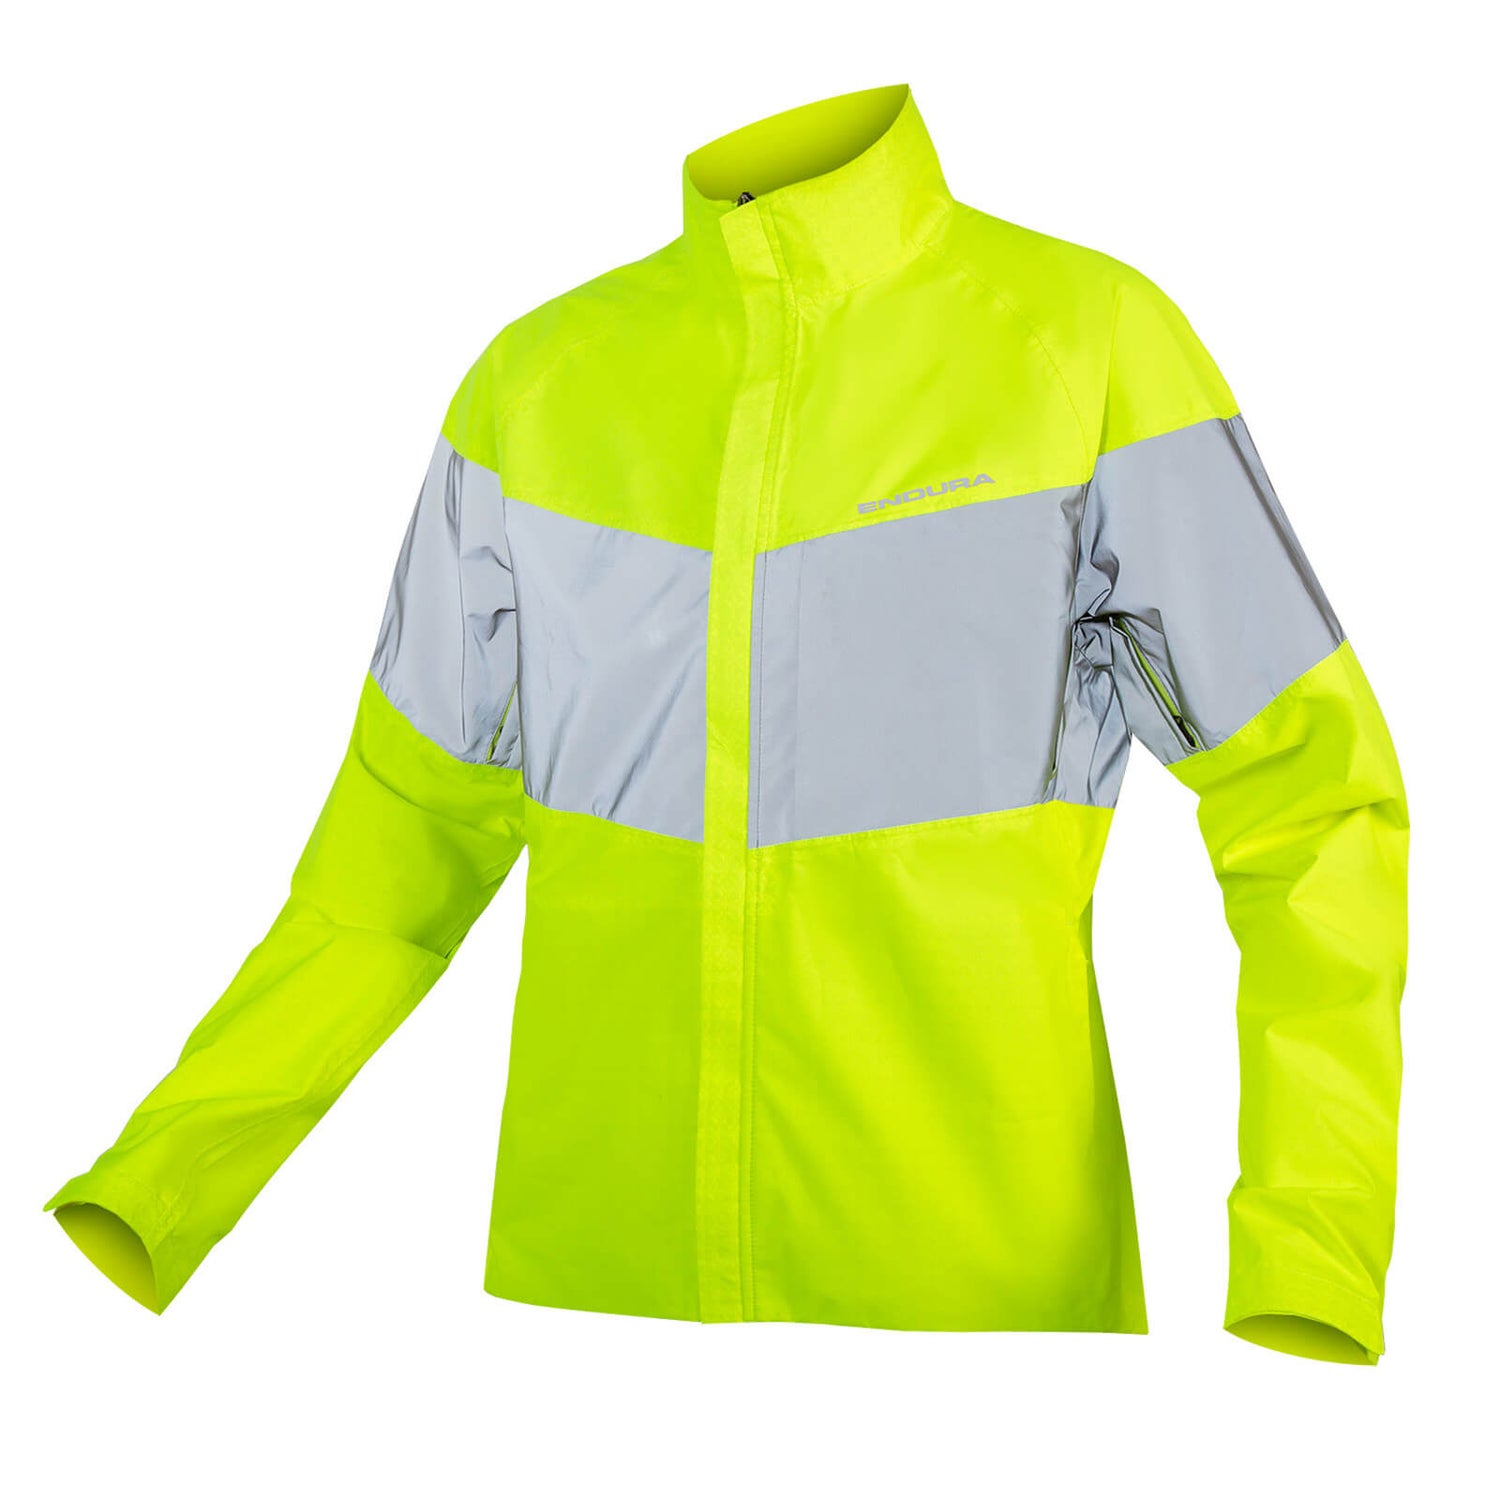 Men's Urban Luminite EN1150 Waterproof Jacket - Hi-Viz Yellow - XXXL